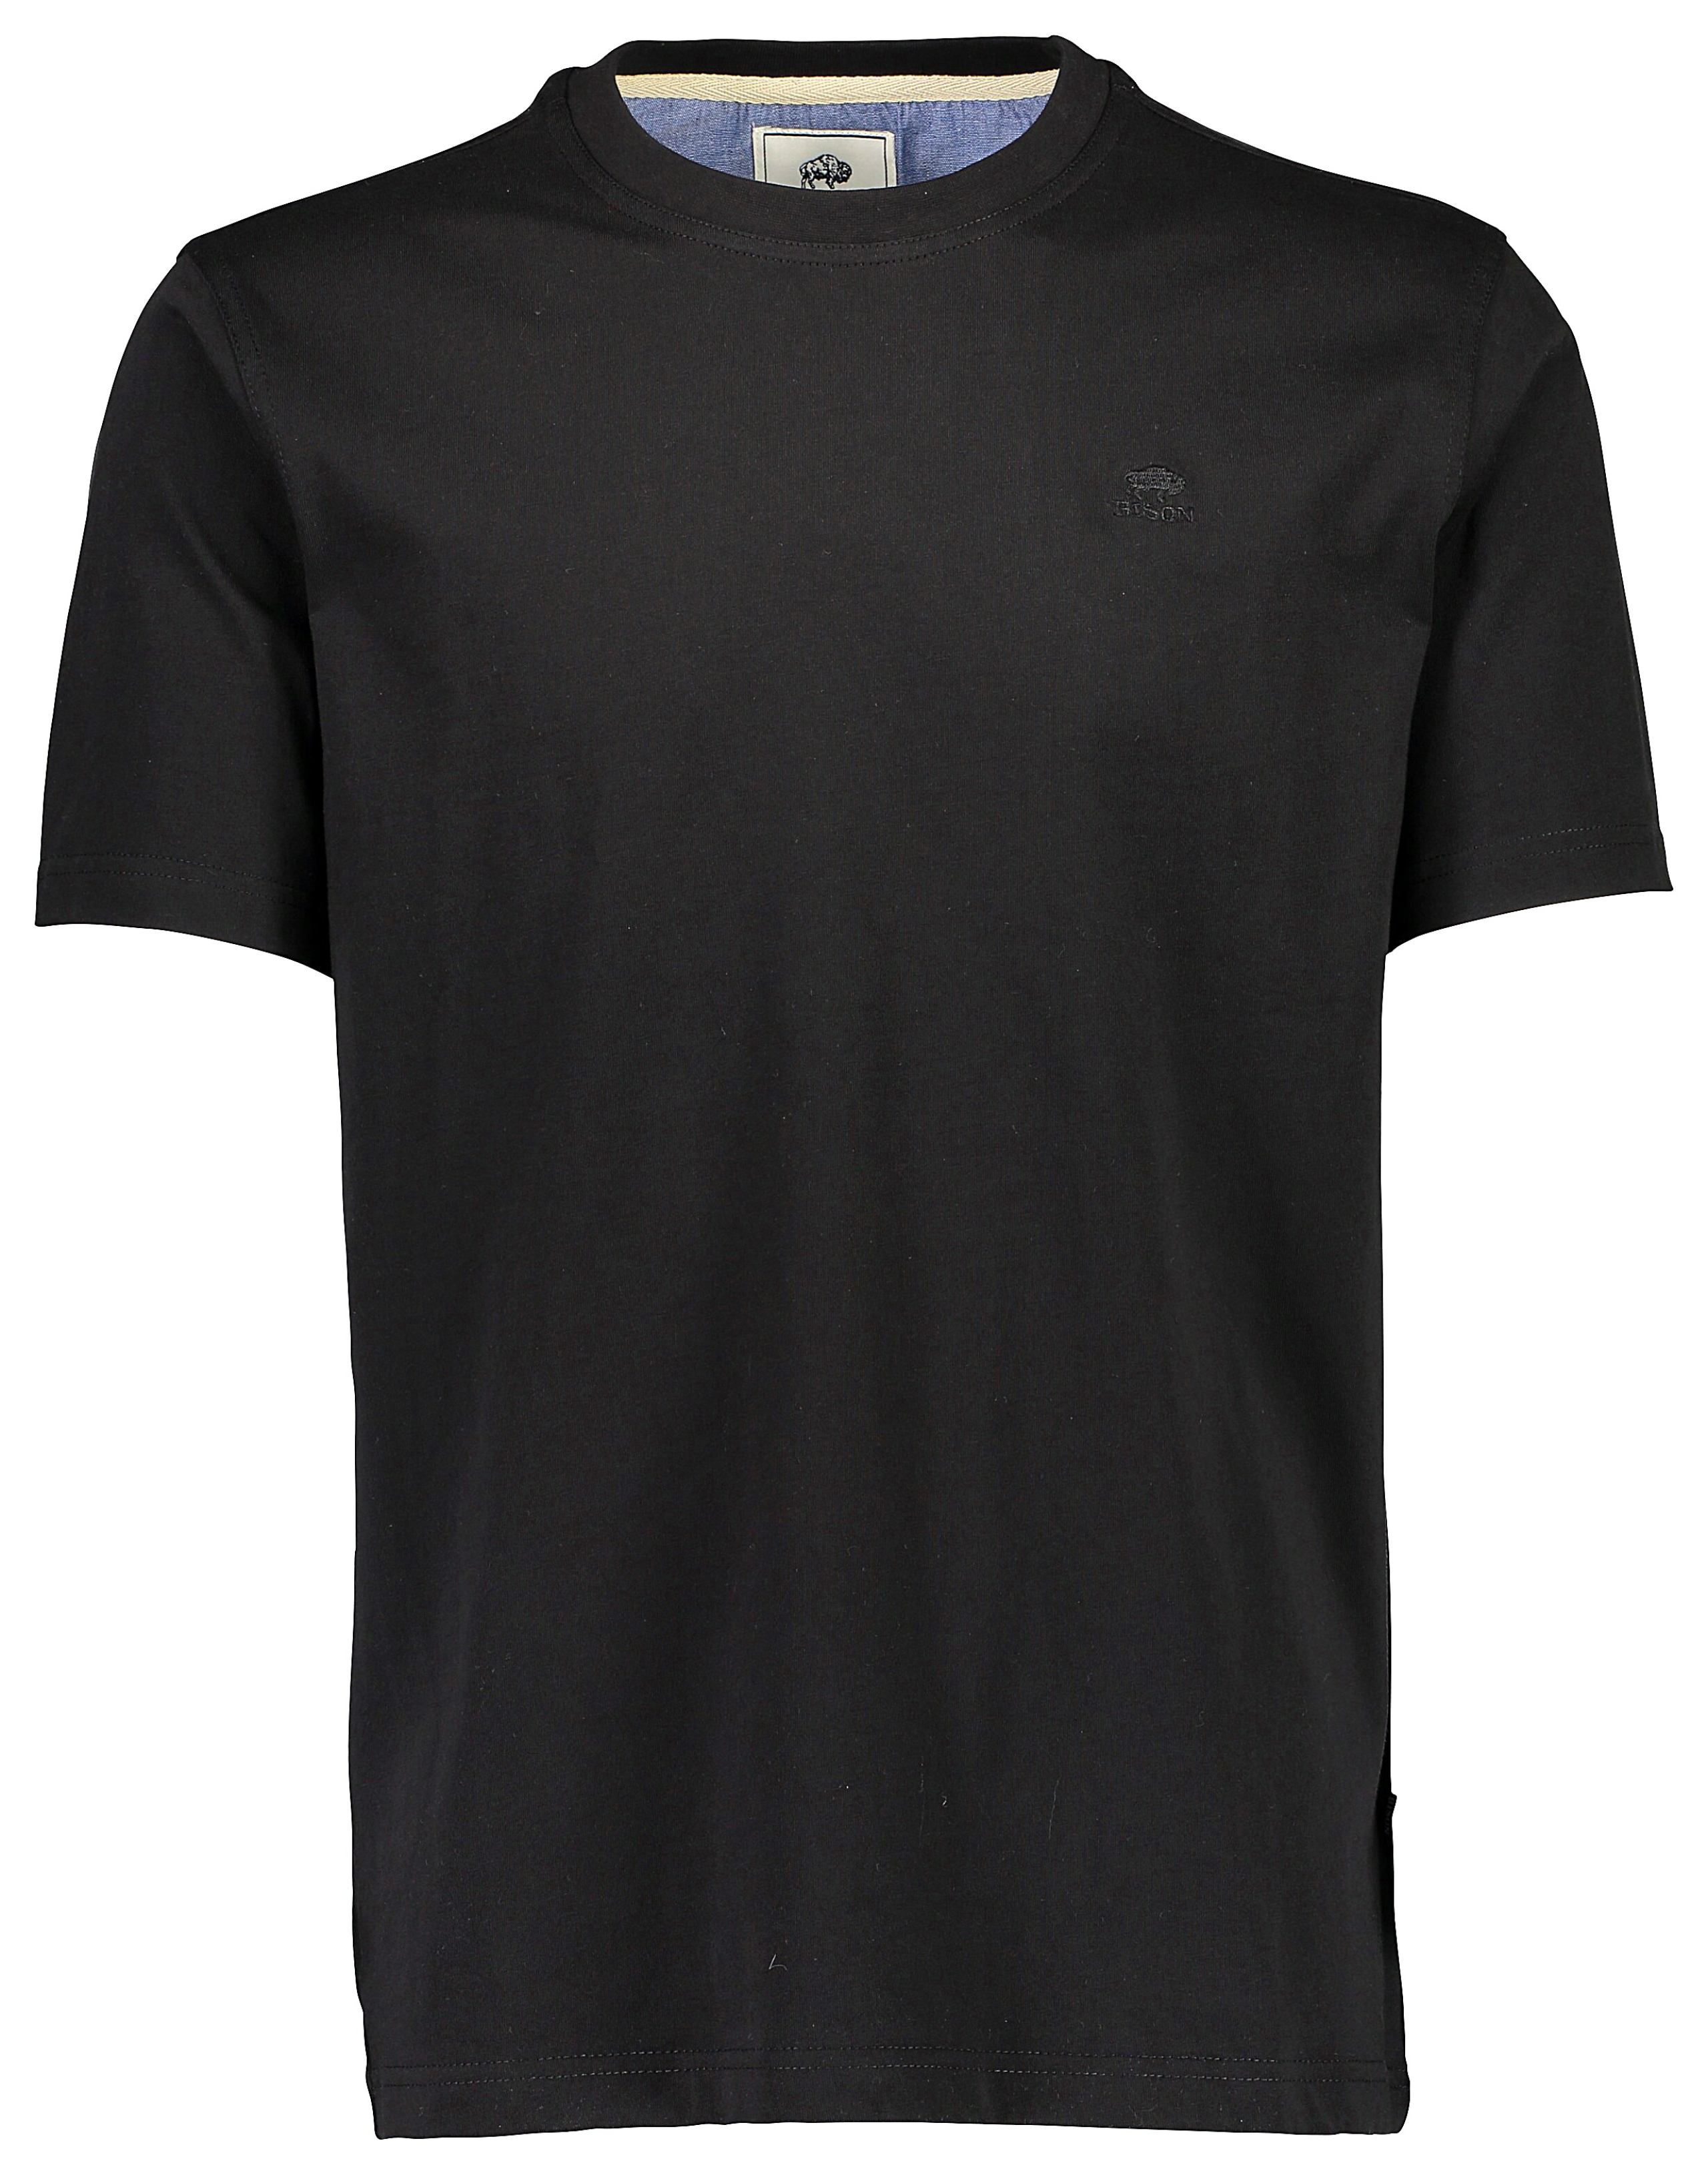 Bison T-shirt svart / black